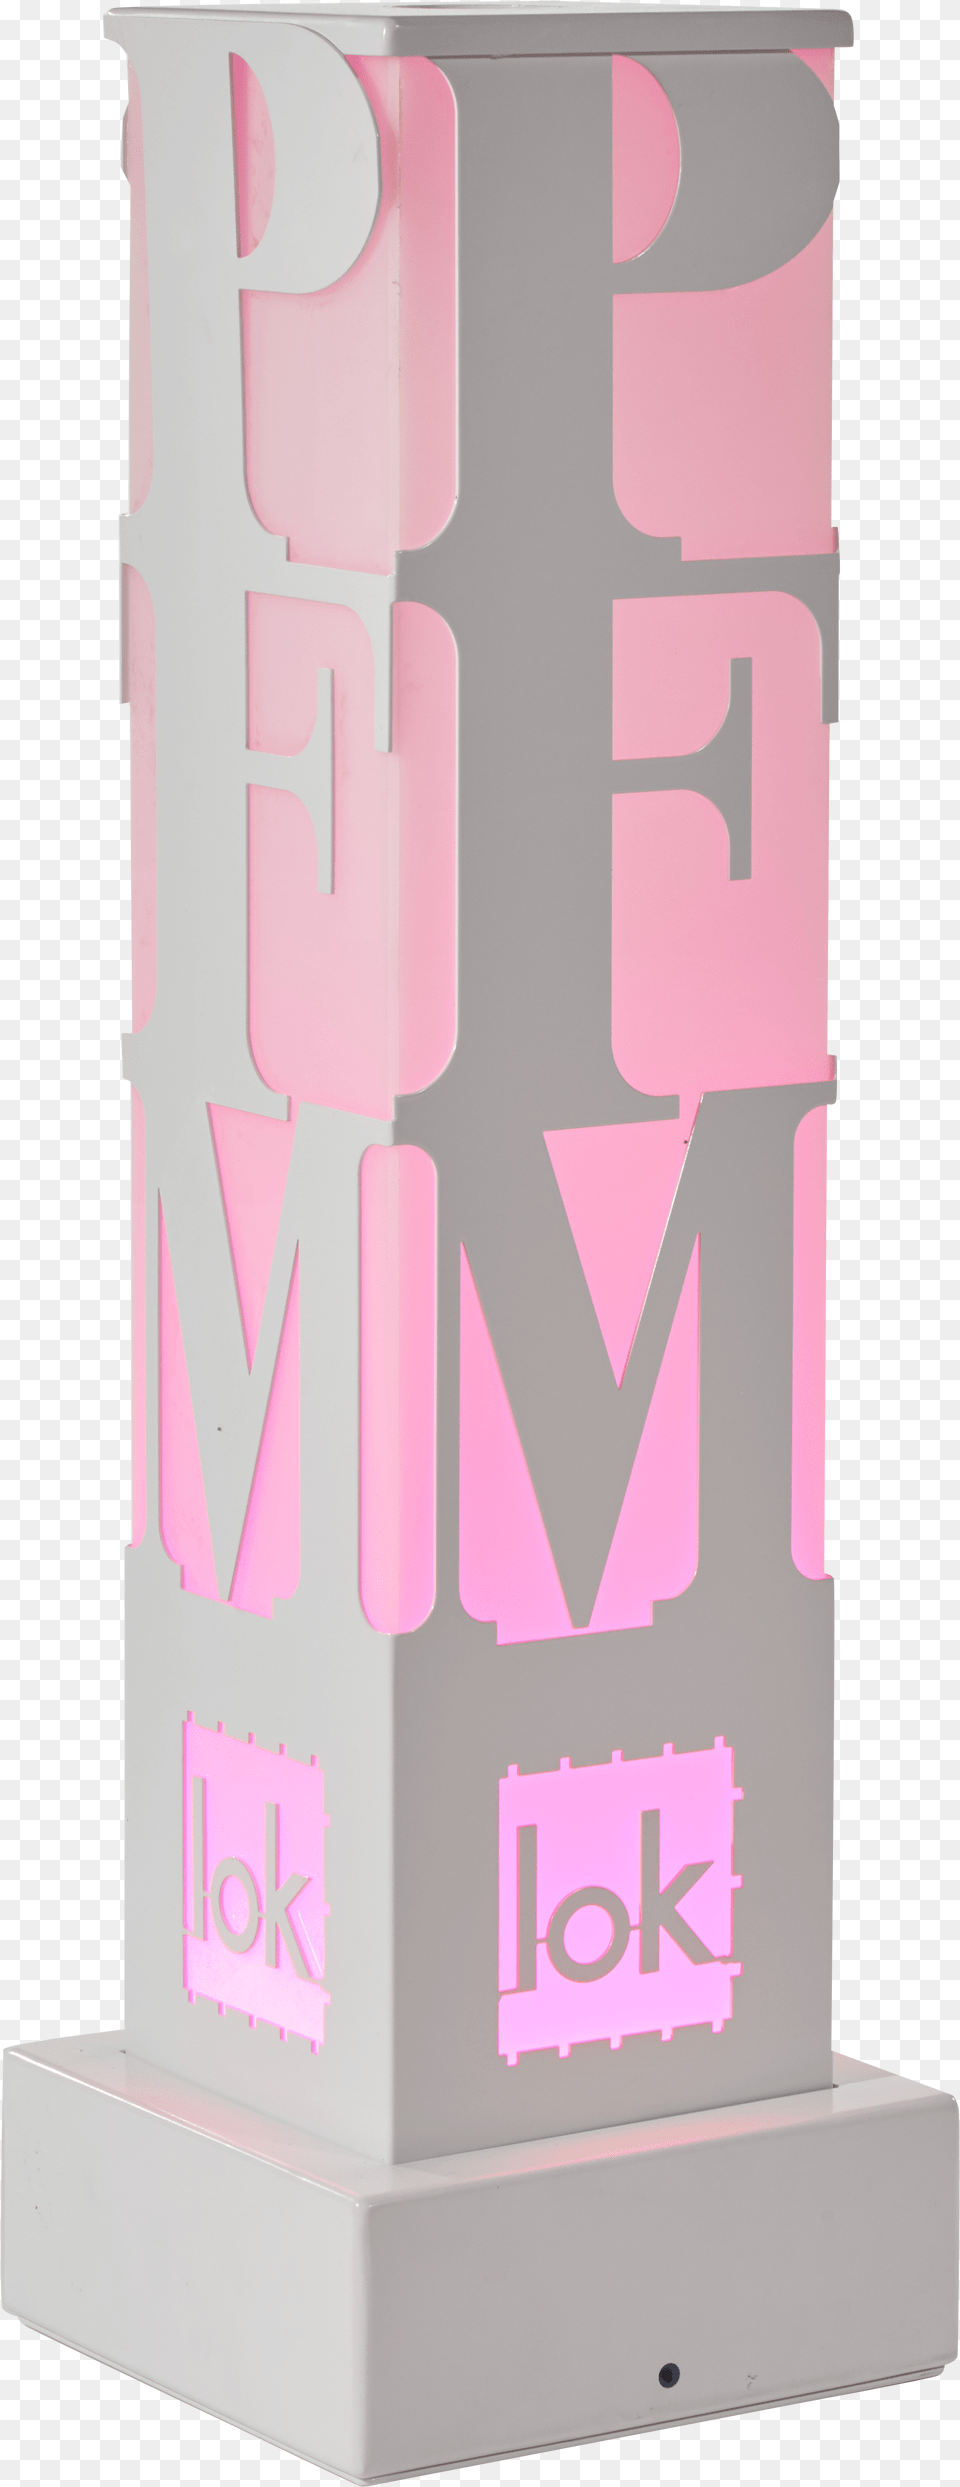 Transparent Pink Effect Graphic Design Png Image